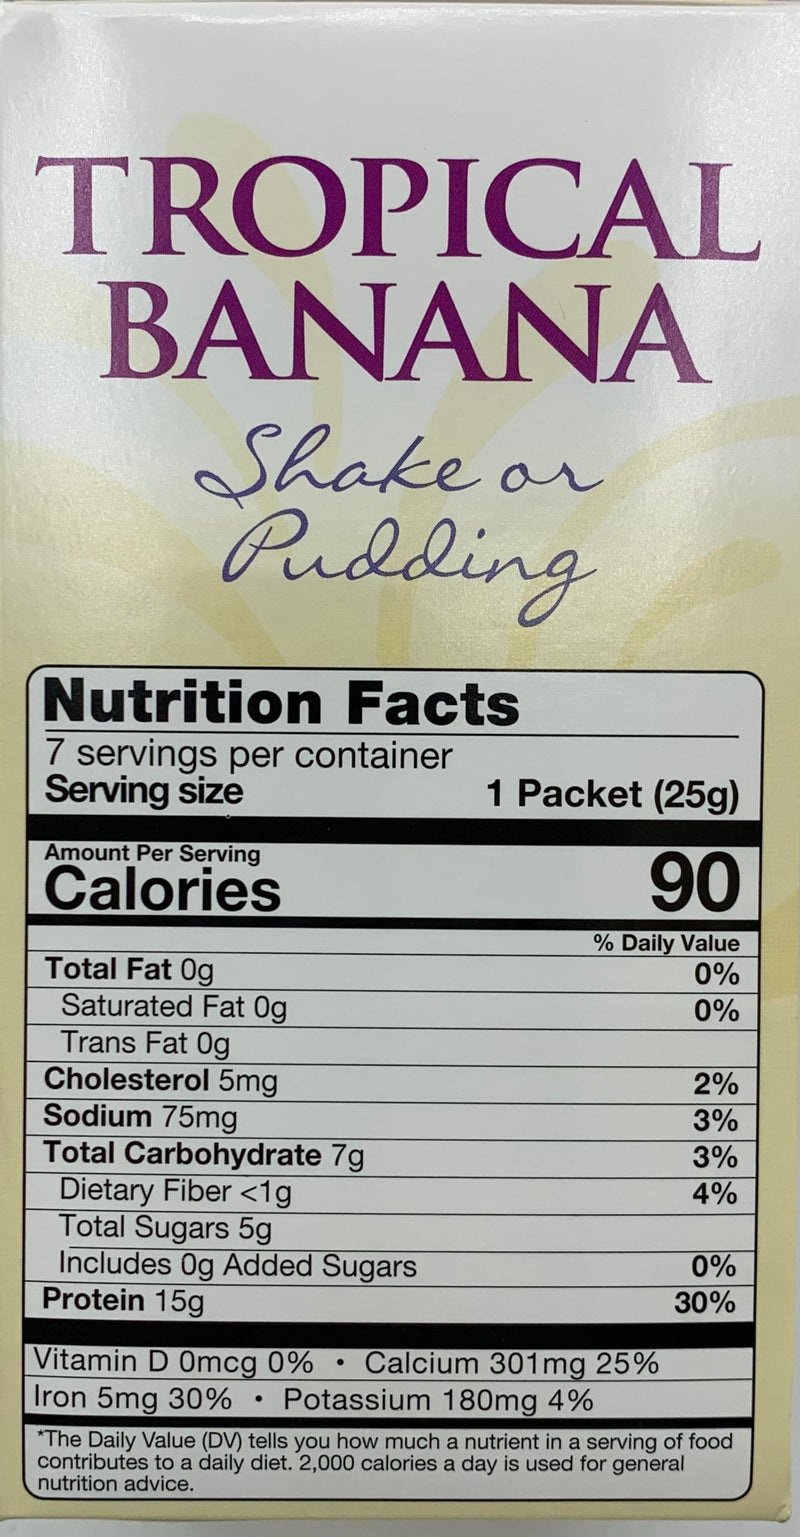 BariatricPal Protein Shake or Pudding - Tropical Banana - High-quality Puddings & Shakes by BariatricPal at 